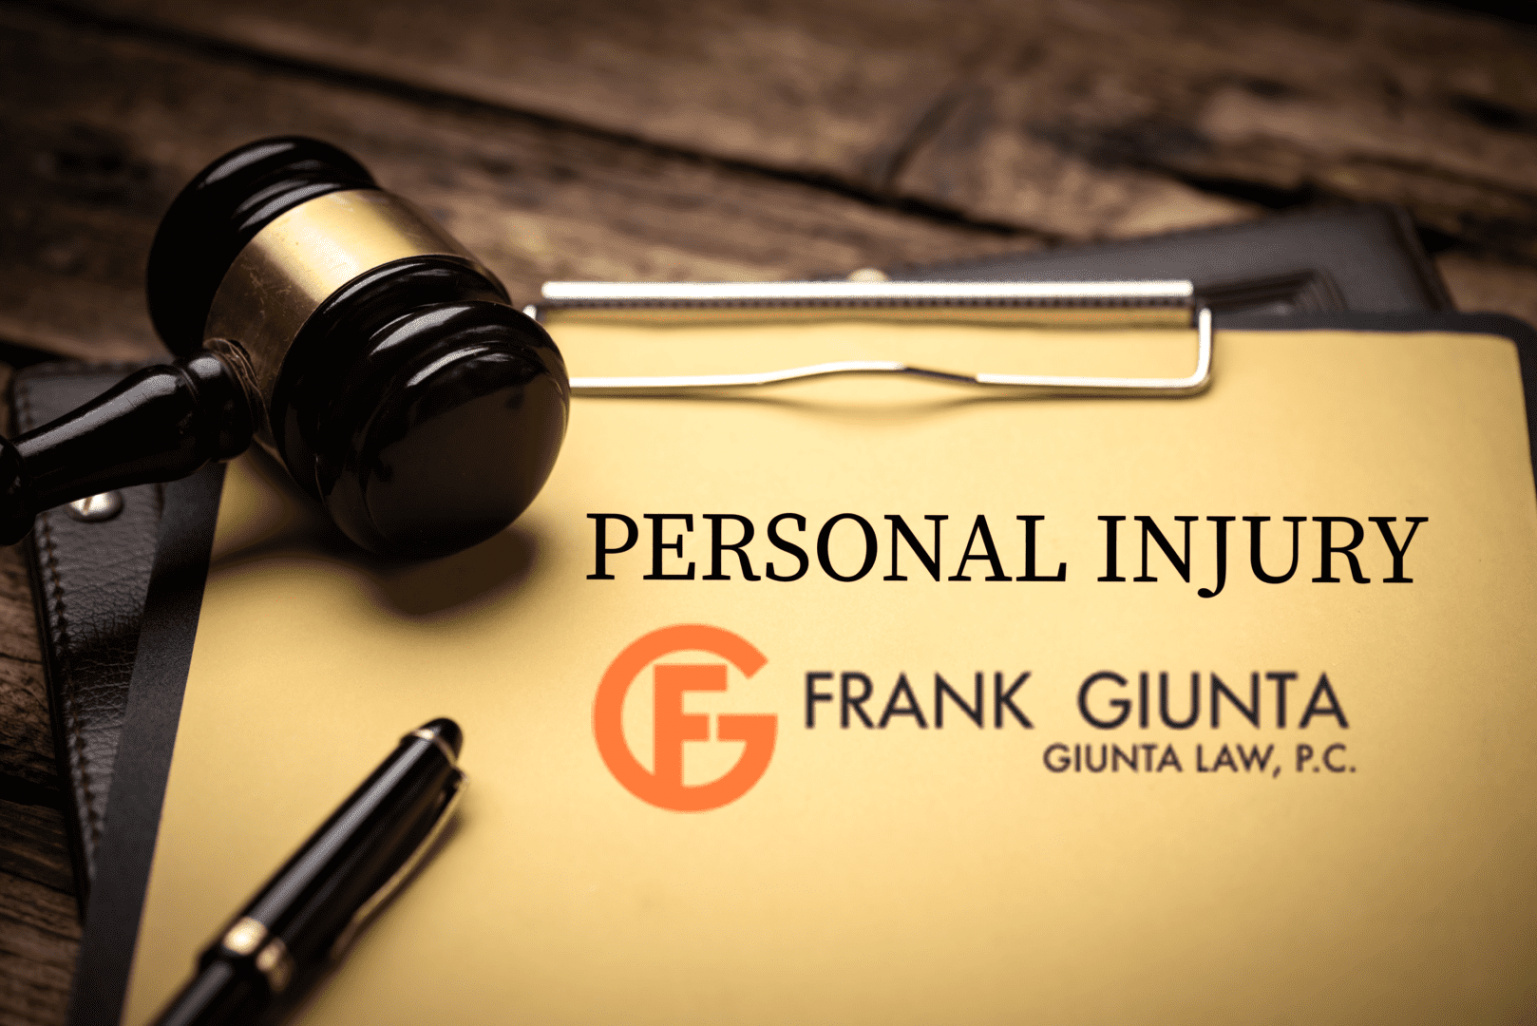 Personal Injury Lawyer Bismarck Nd Dans Frank Giunta Law Blog